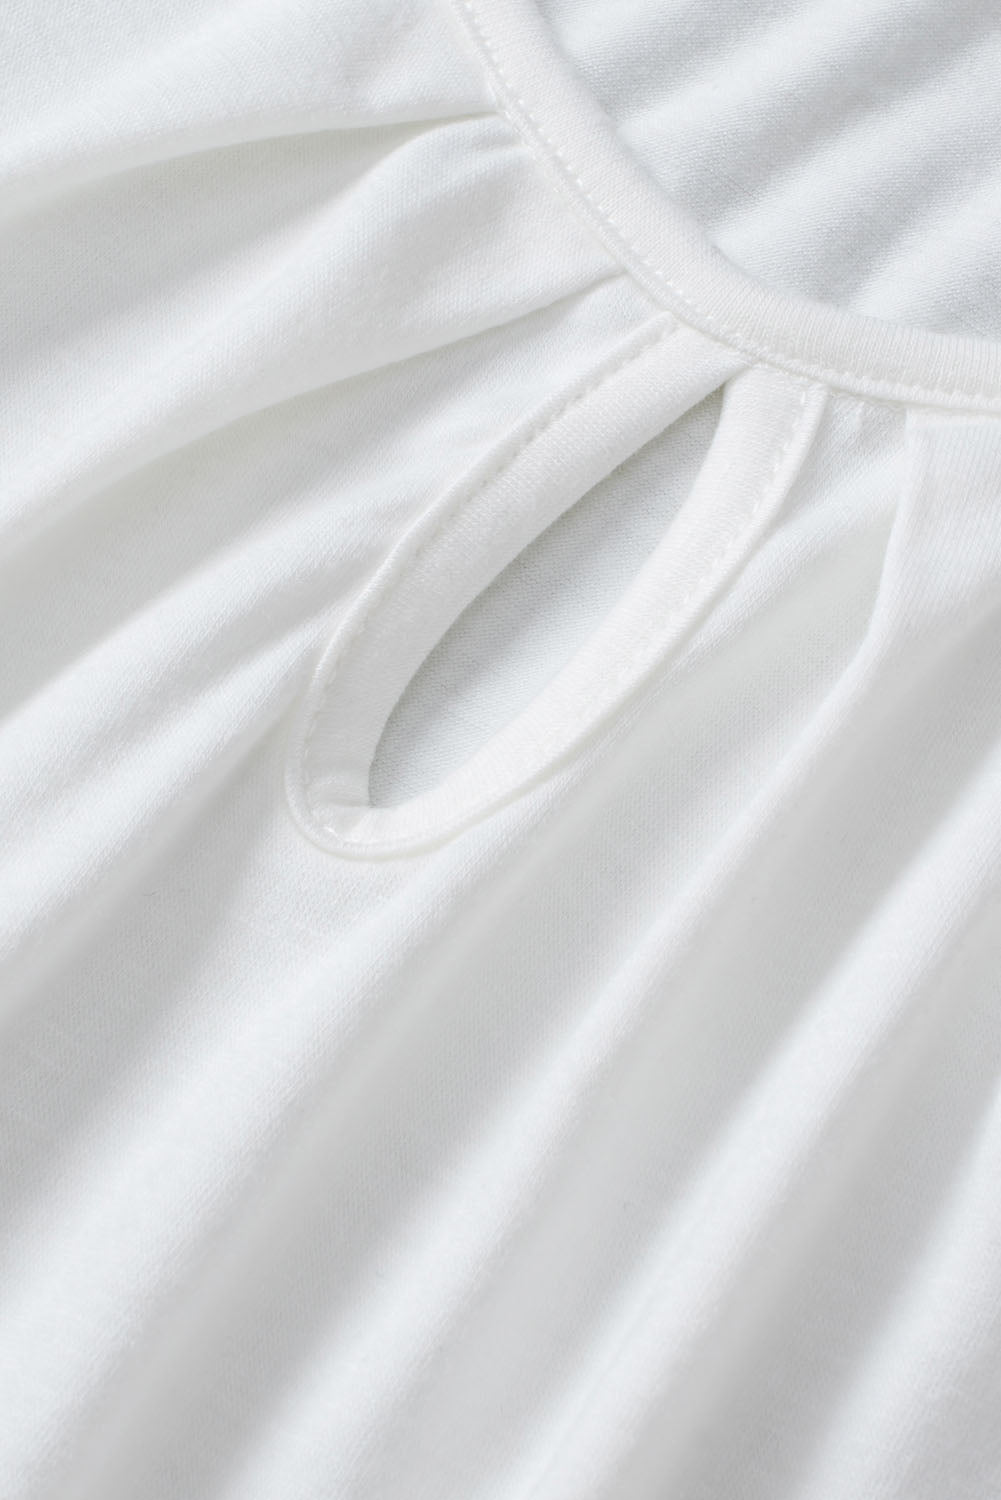 White Contrast Lace Sleeve Keyhole Neck Pleated T Shirt